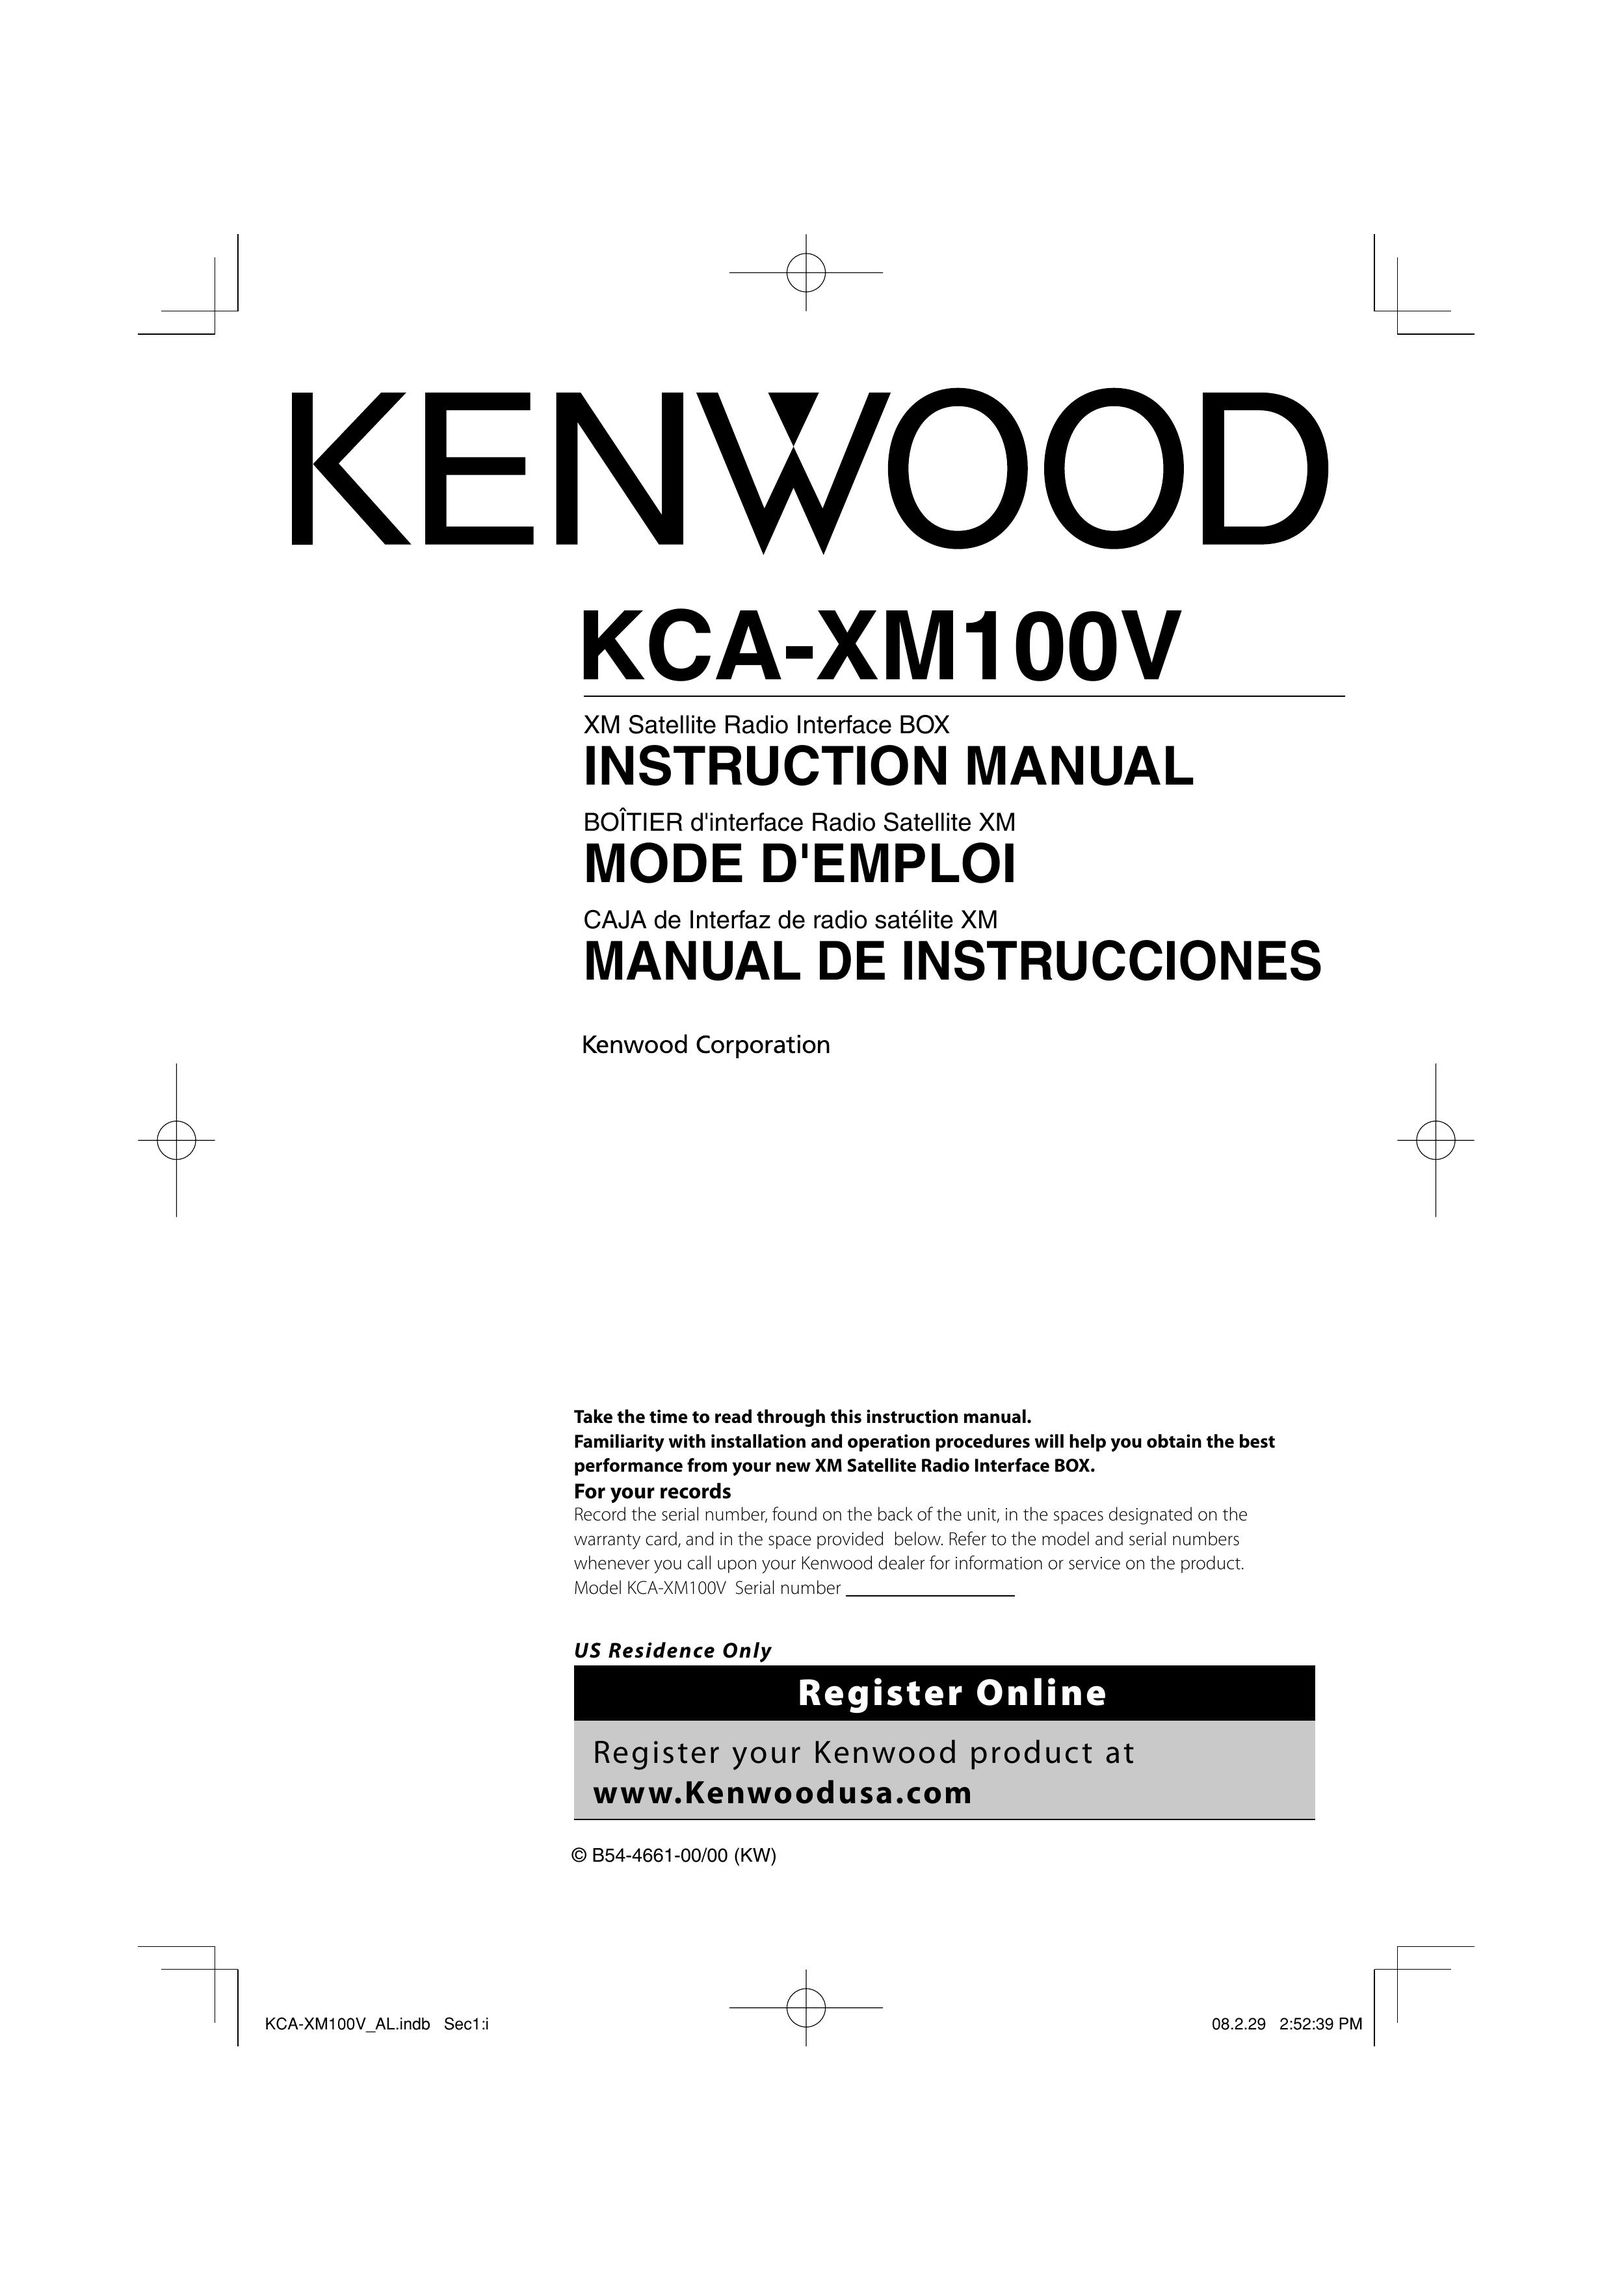 Kenwood KCA-XM100V Car Satellite Radio System User Manual